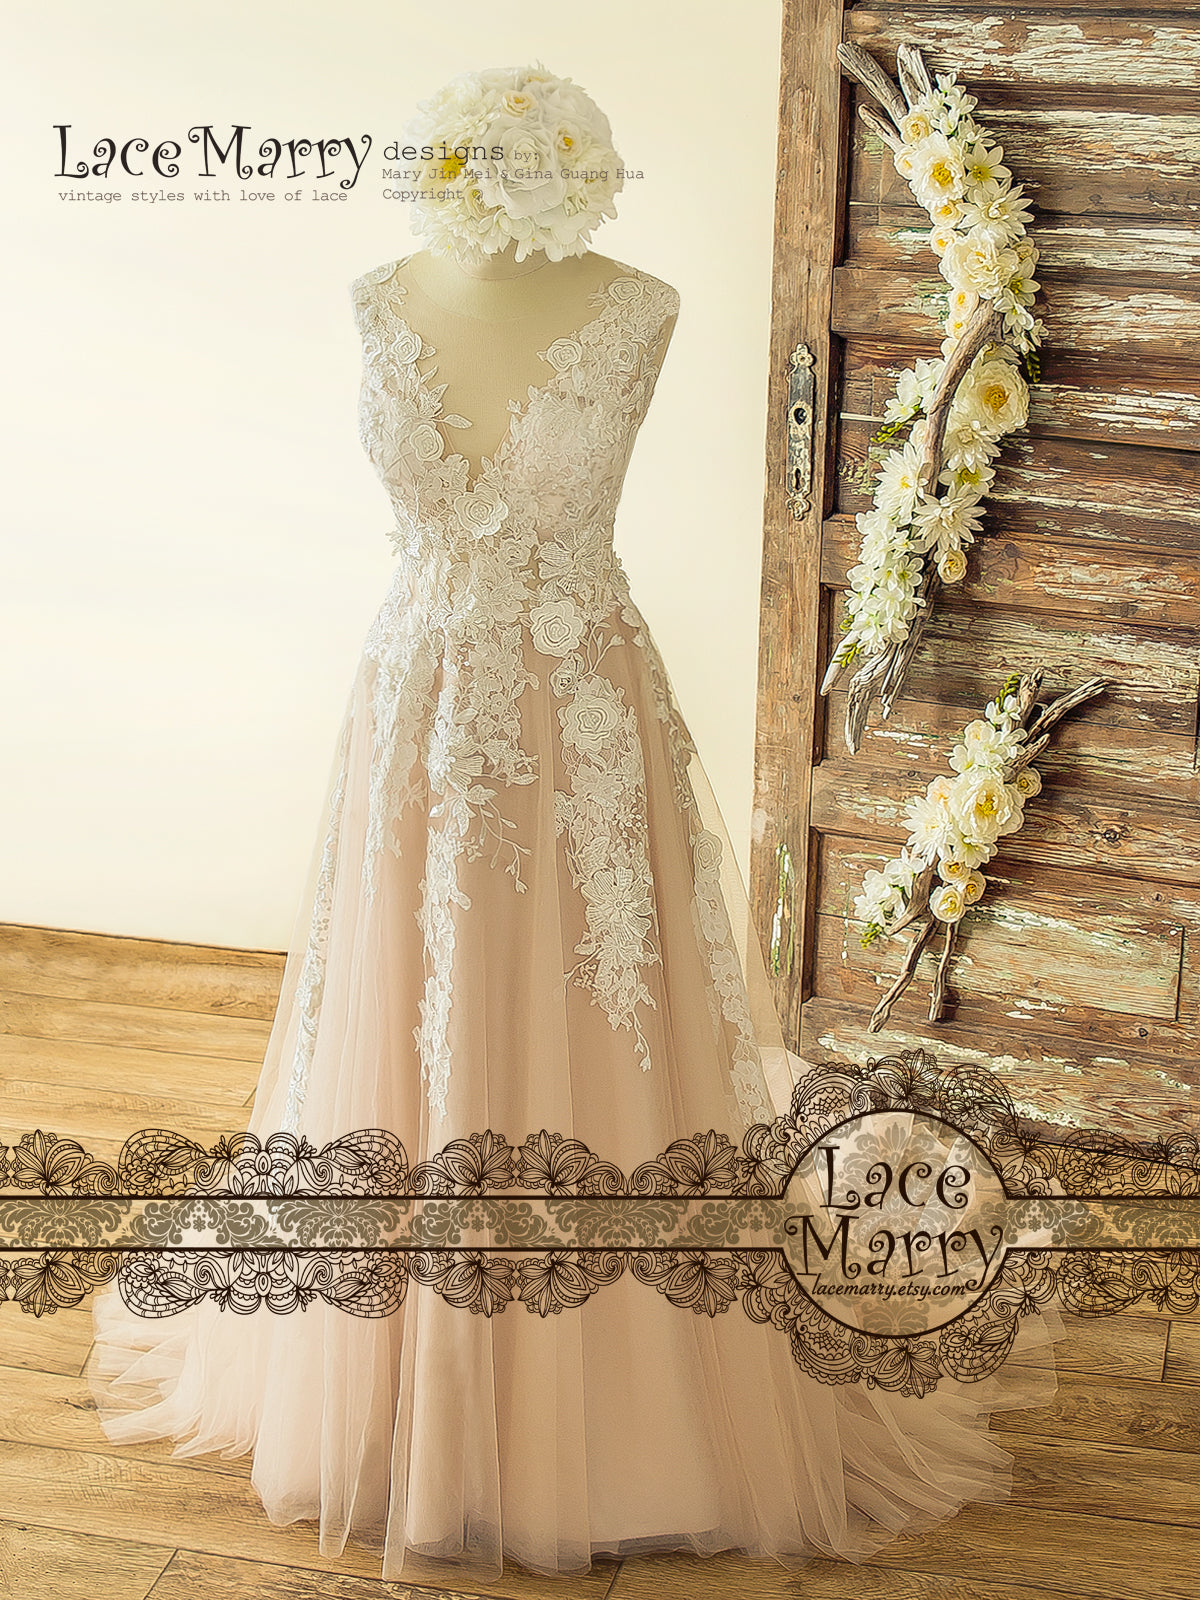 Avadress Fancy Flower Girl Lace Applique Wedding Dress